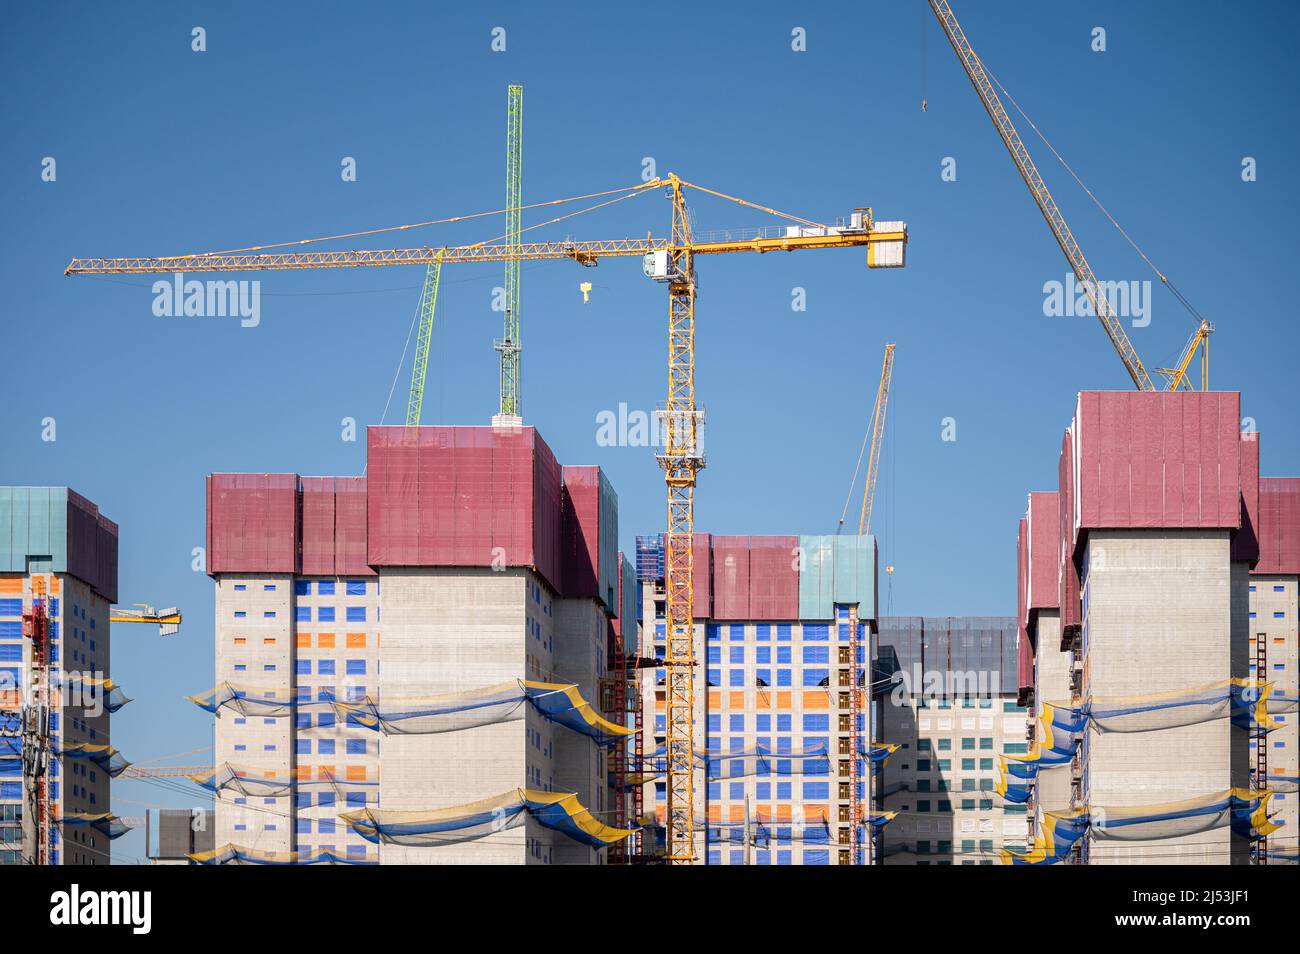 Panorama con muchas grúas torre de construcción en cielo azul claro. Foto de stock